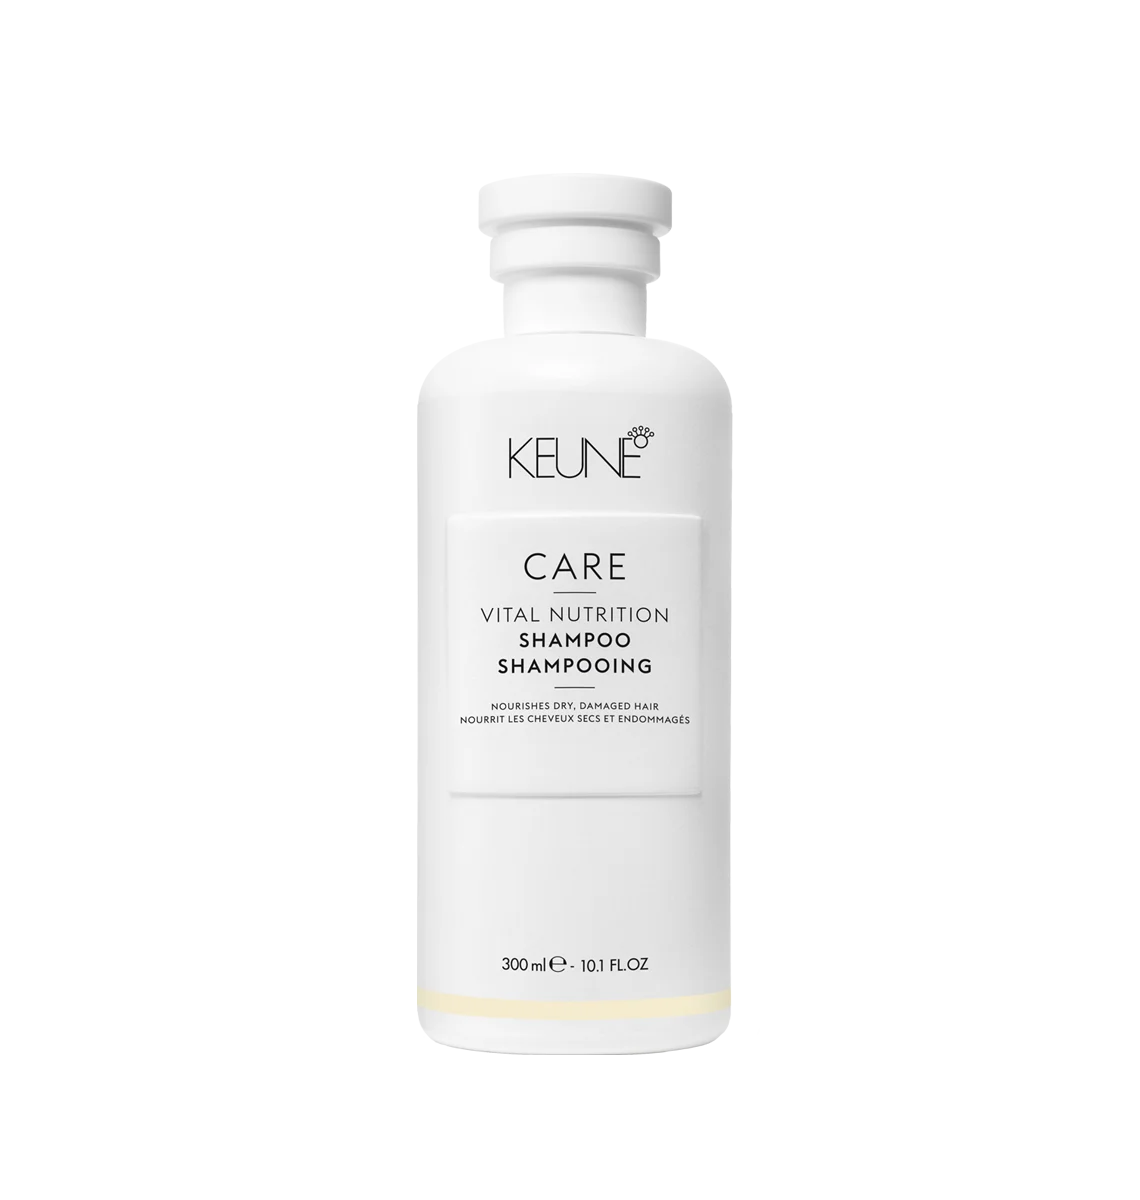 Image of bottle Keune Care Vital Nutrition Shampoo